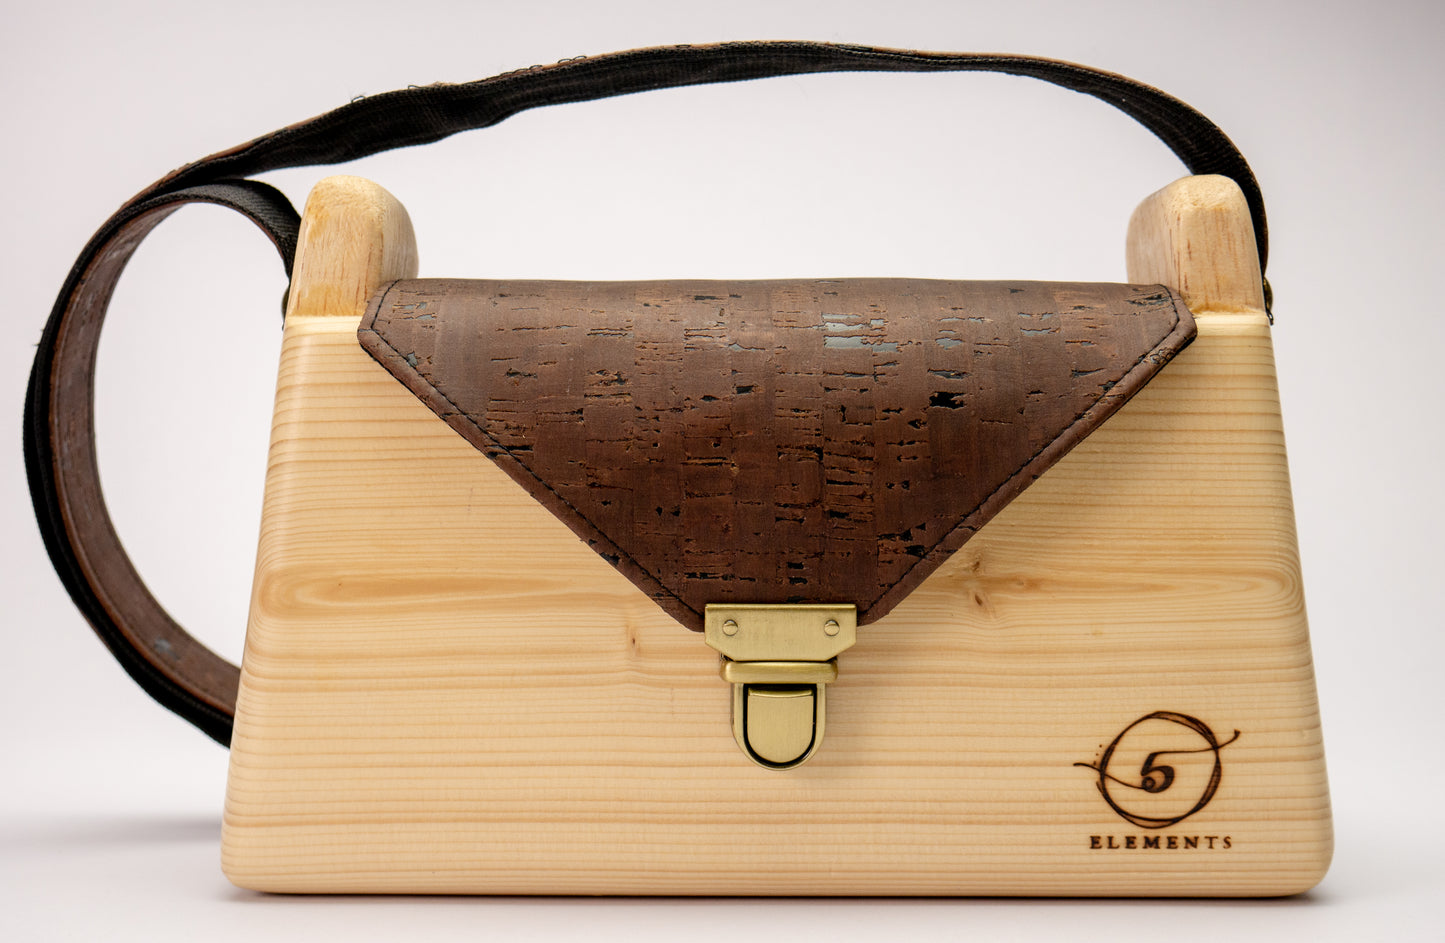 Wooden handmade shoulder bag with dark brown cork leather.